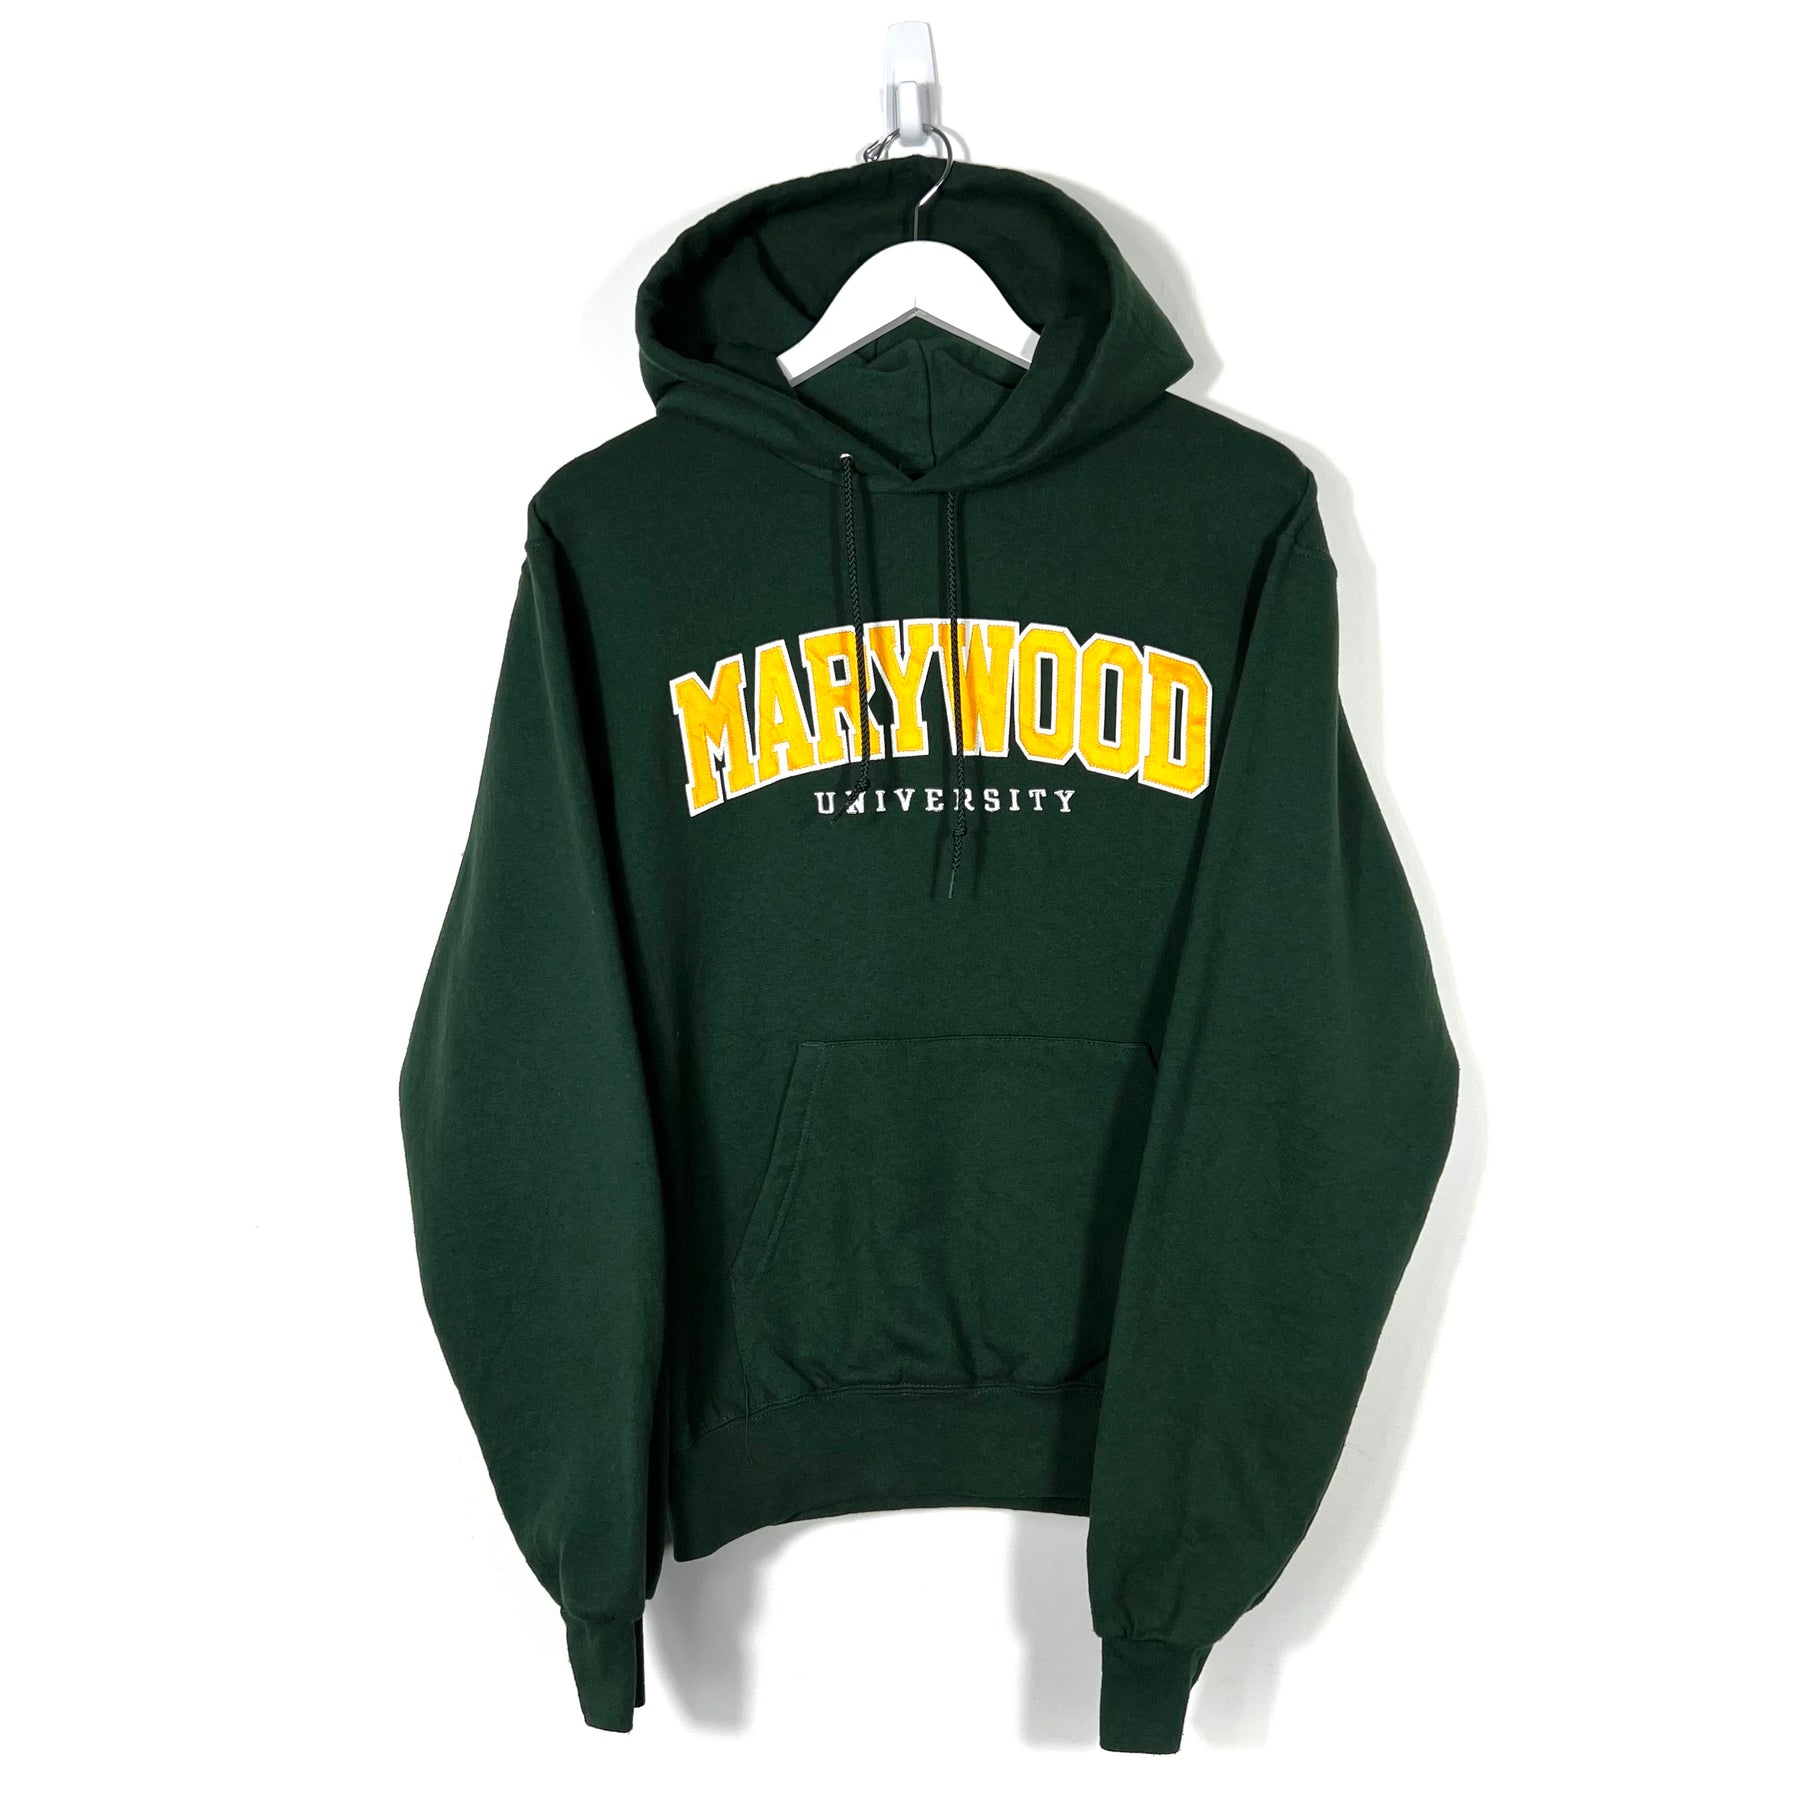 Vintage Champion Marywood University Hoodie - Men's Small